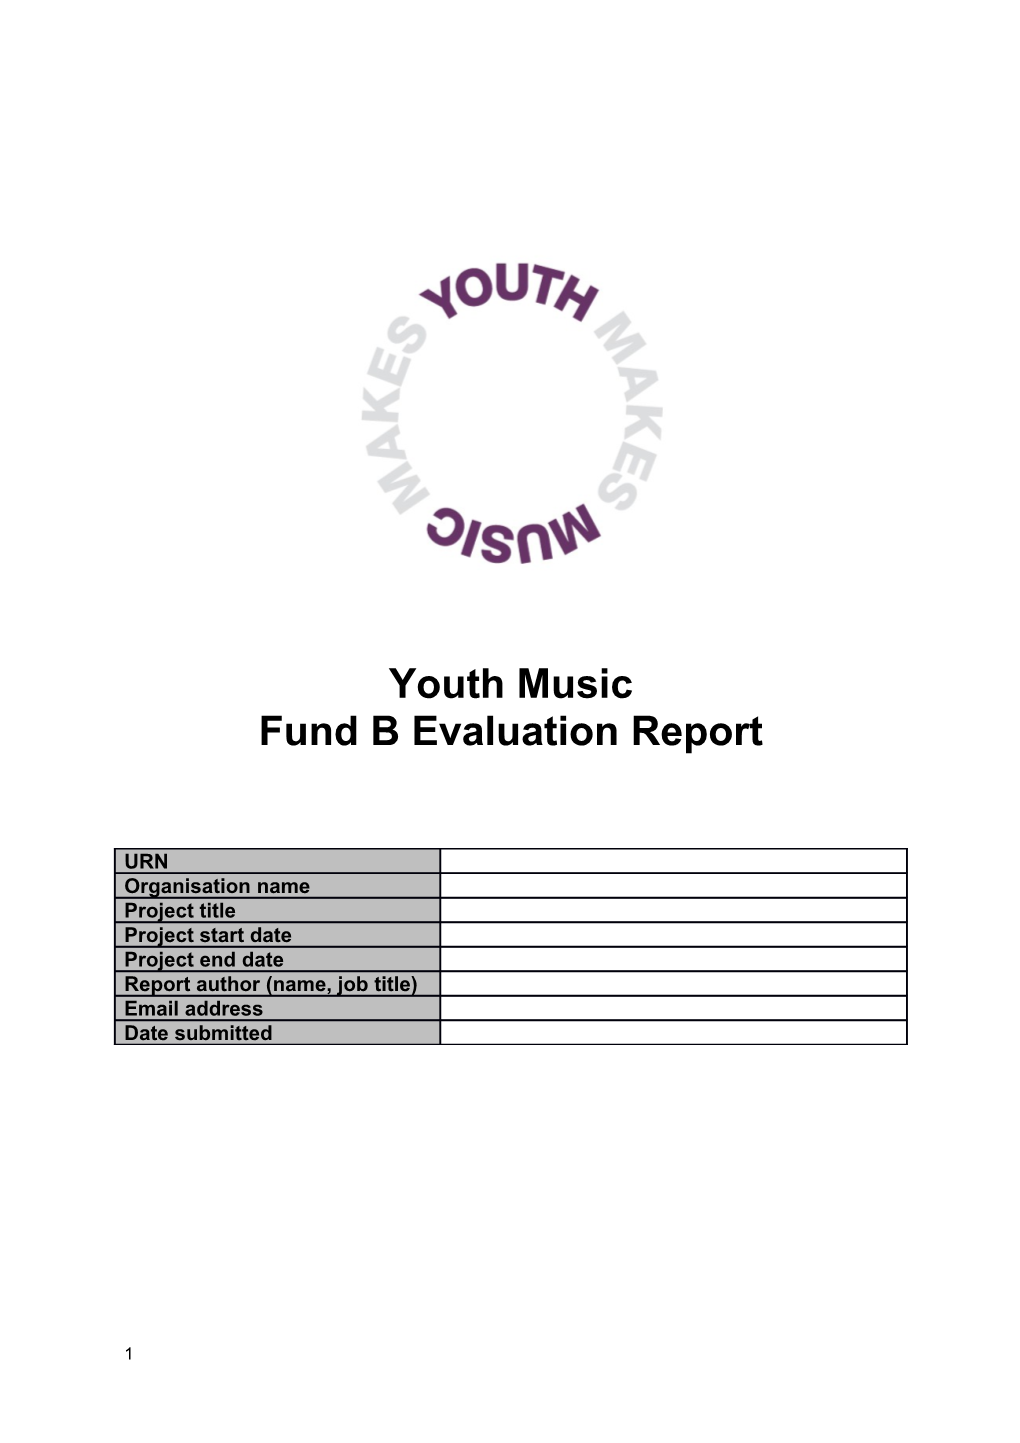 Fund B Evaluation Report